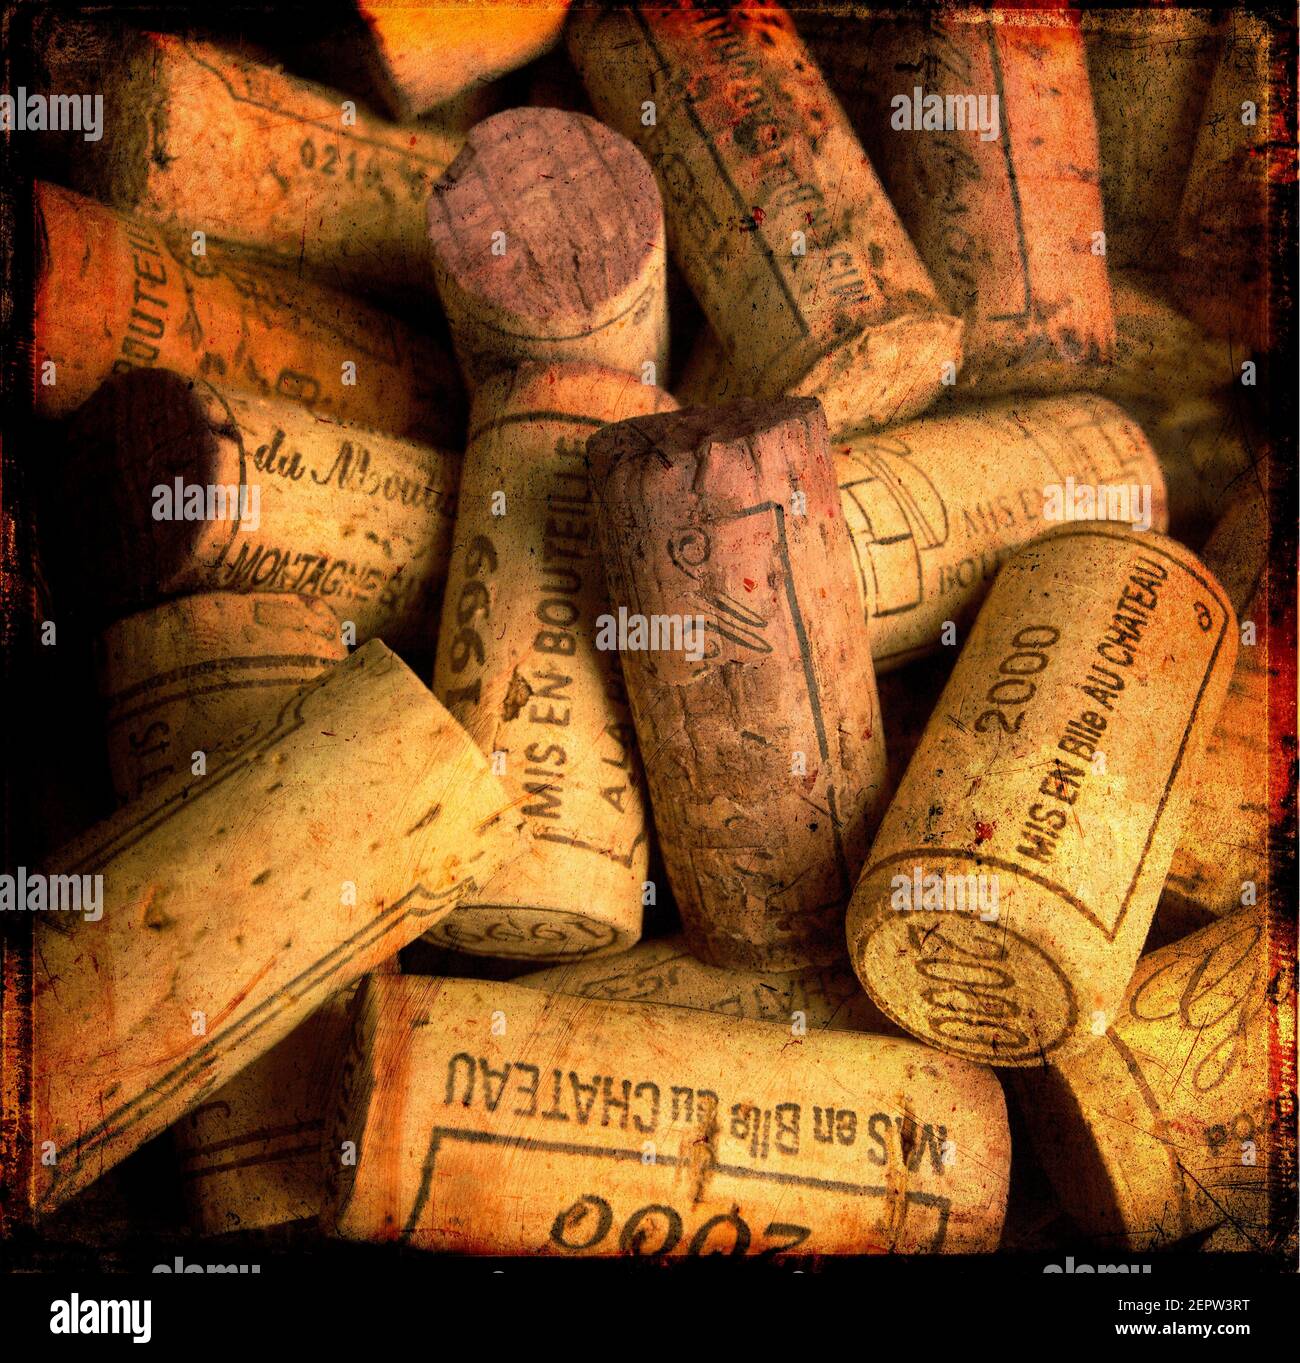 French wine corks Stock Photo